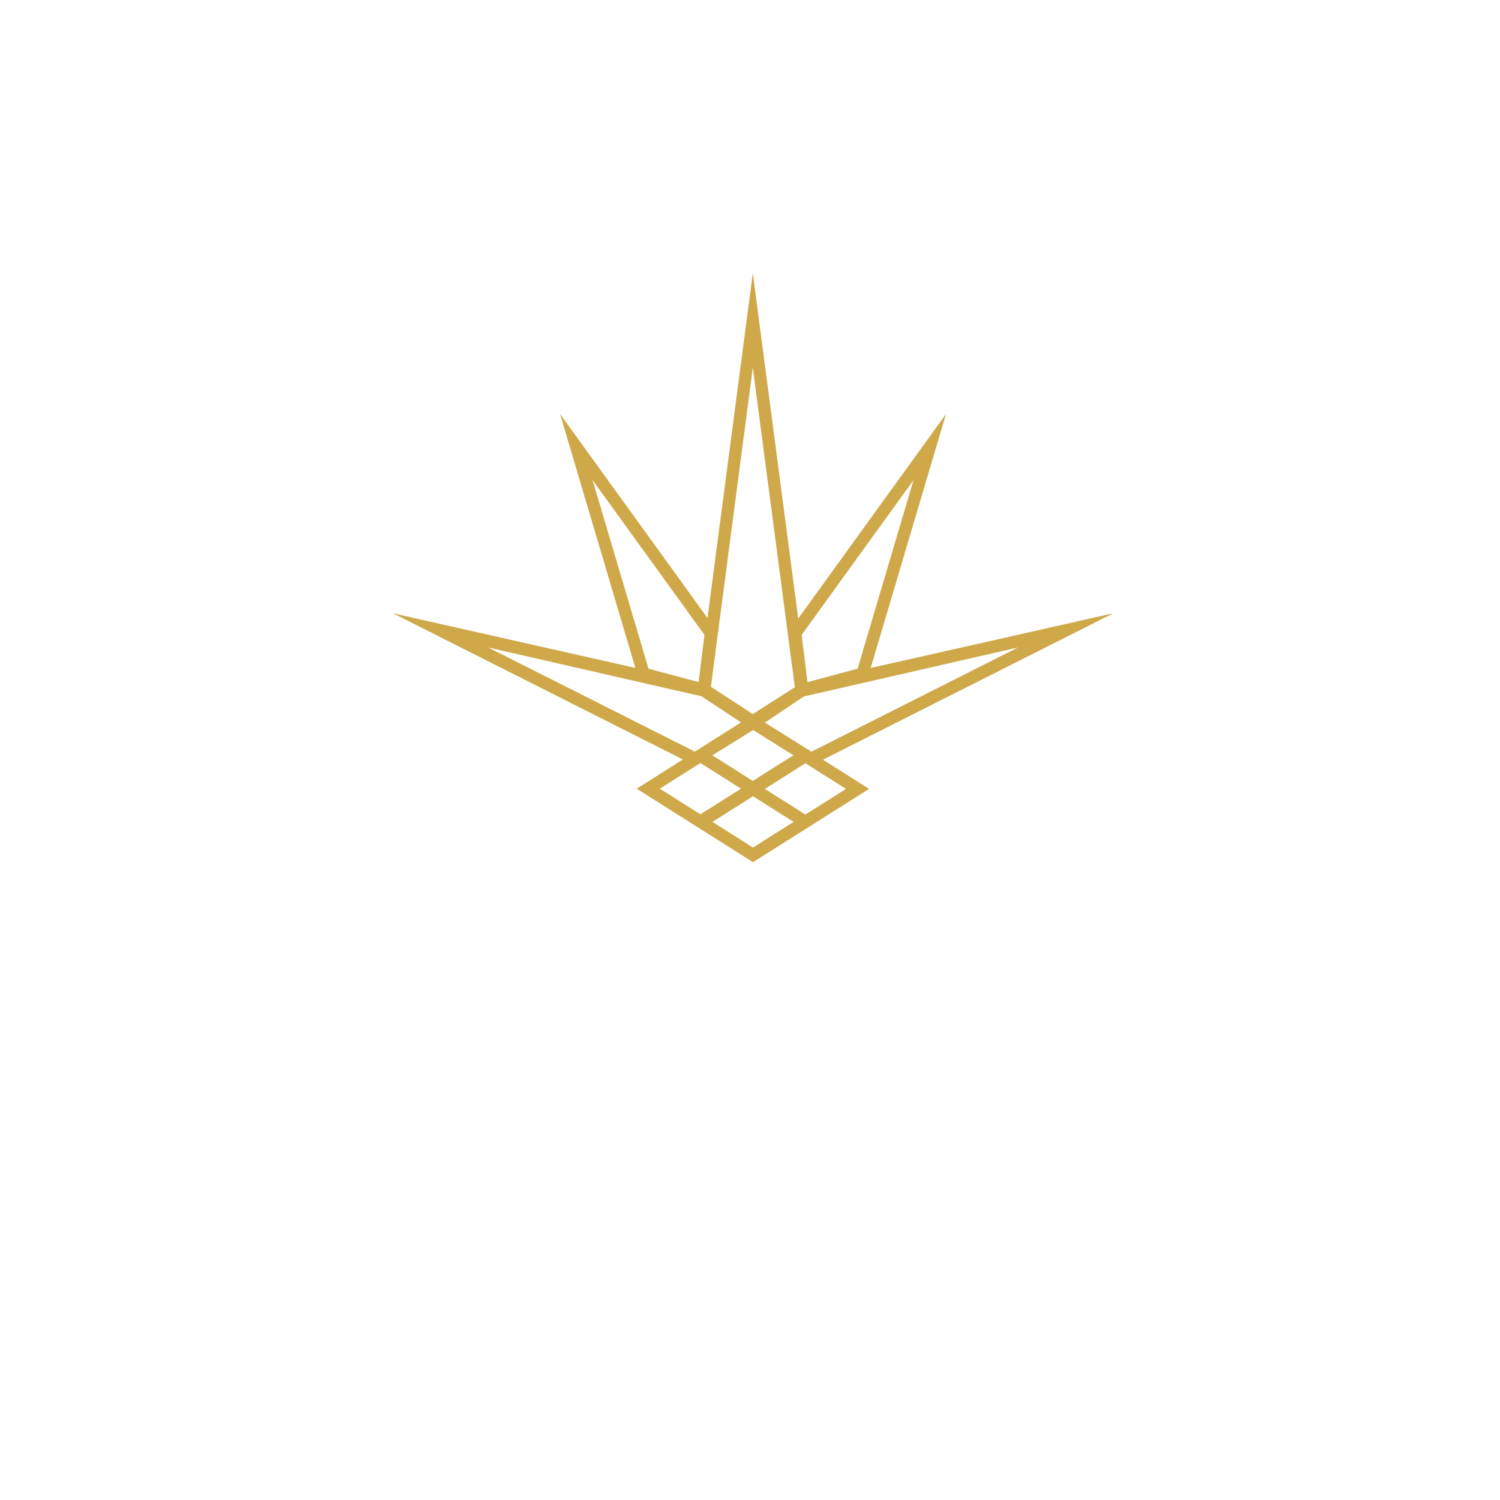 Pattern Bar